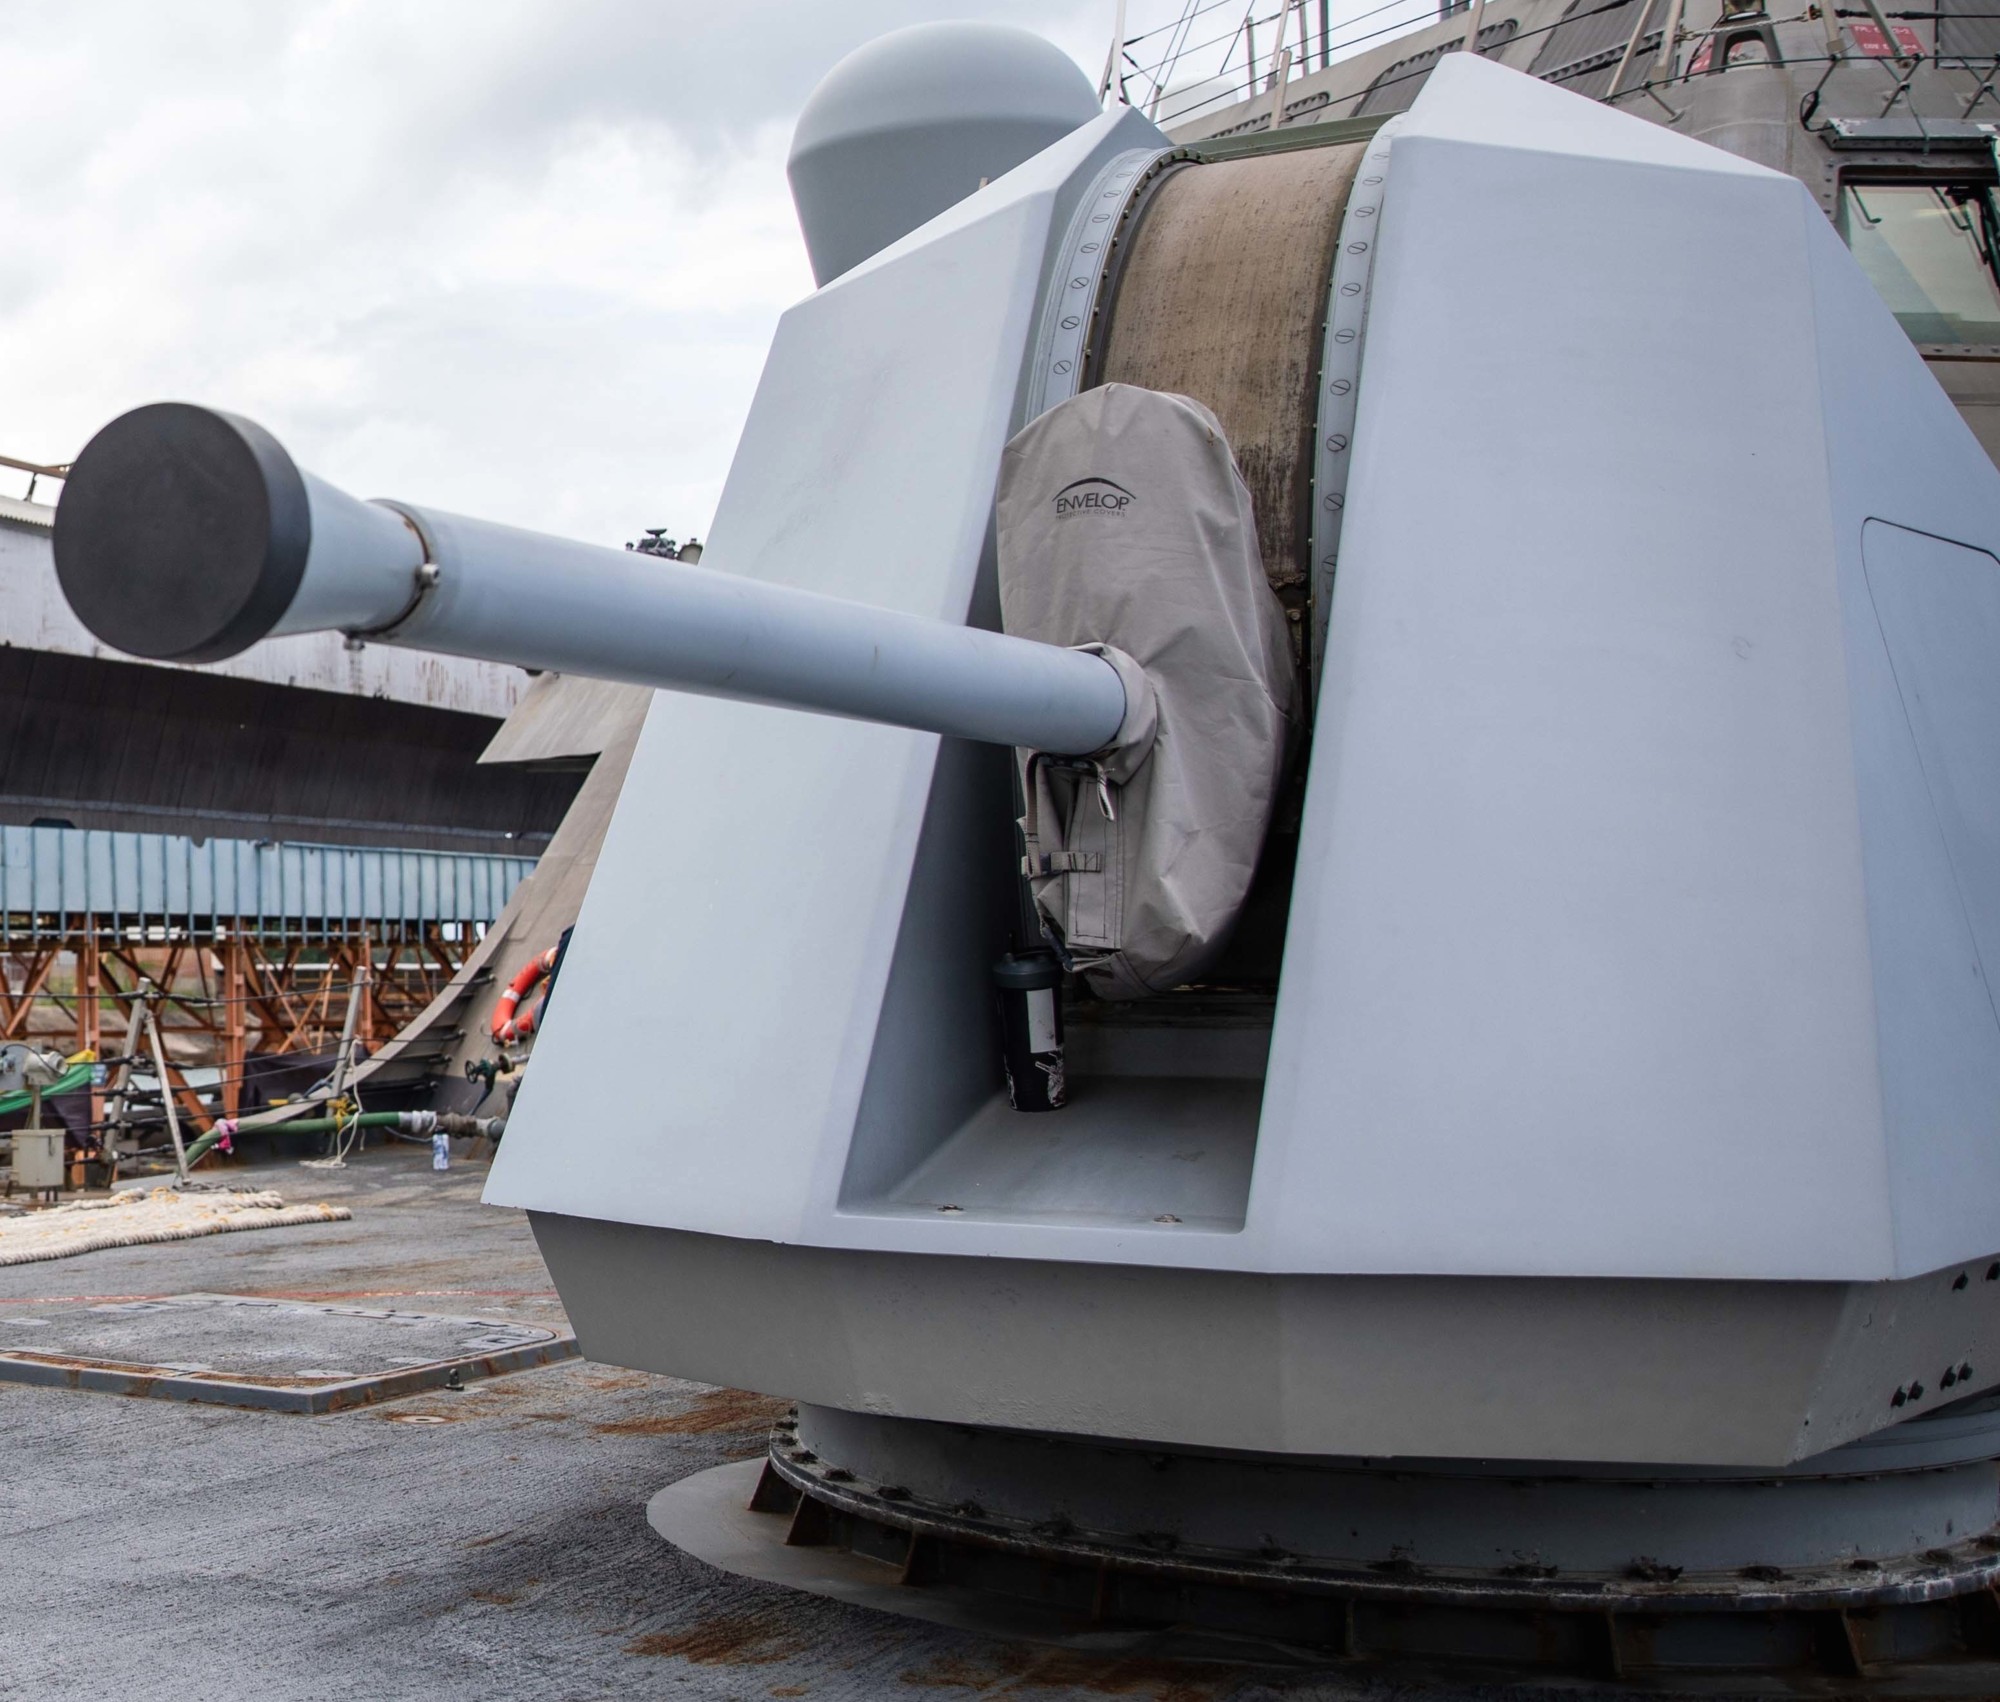 mk.110 mod.0 57mm naval gun bofors 57/L70 bae systems freedom class littoral combat ship lcs us navy 31